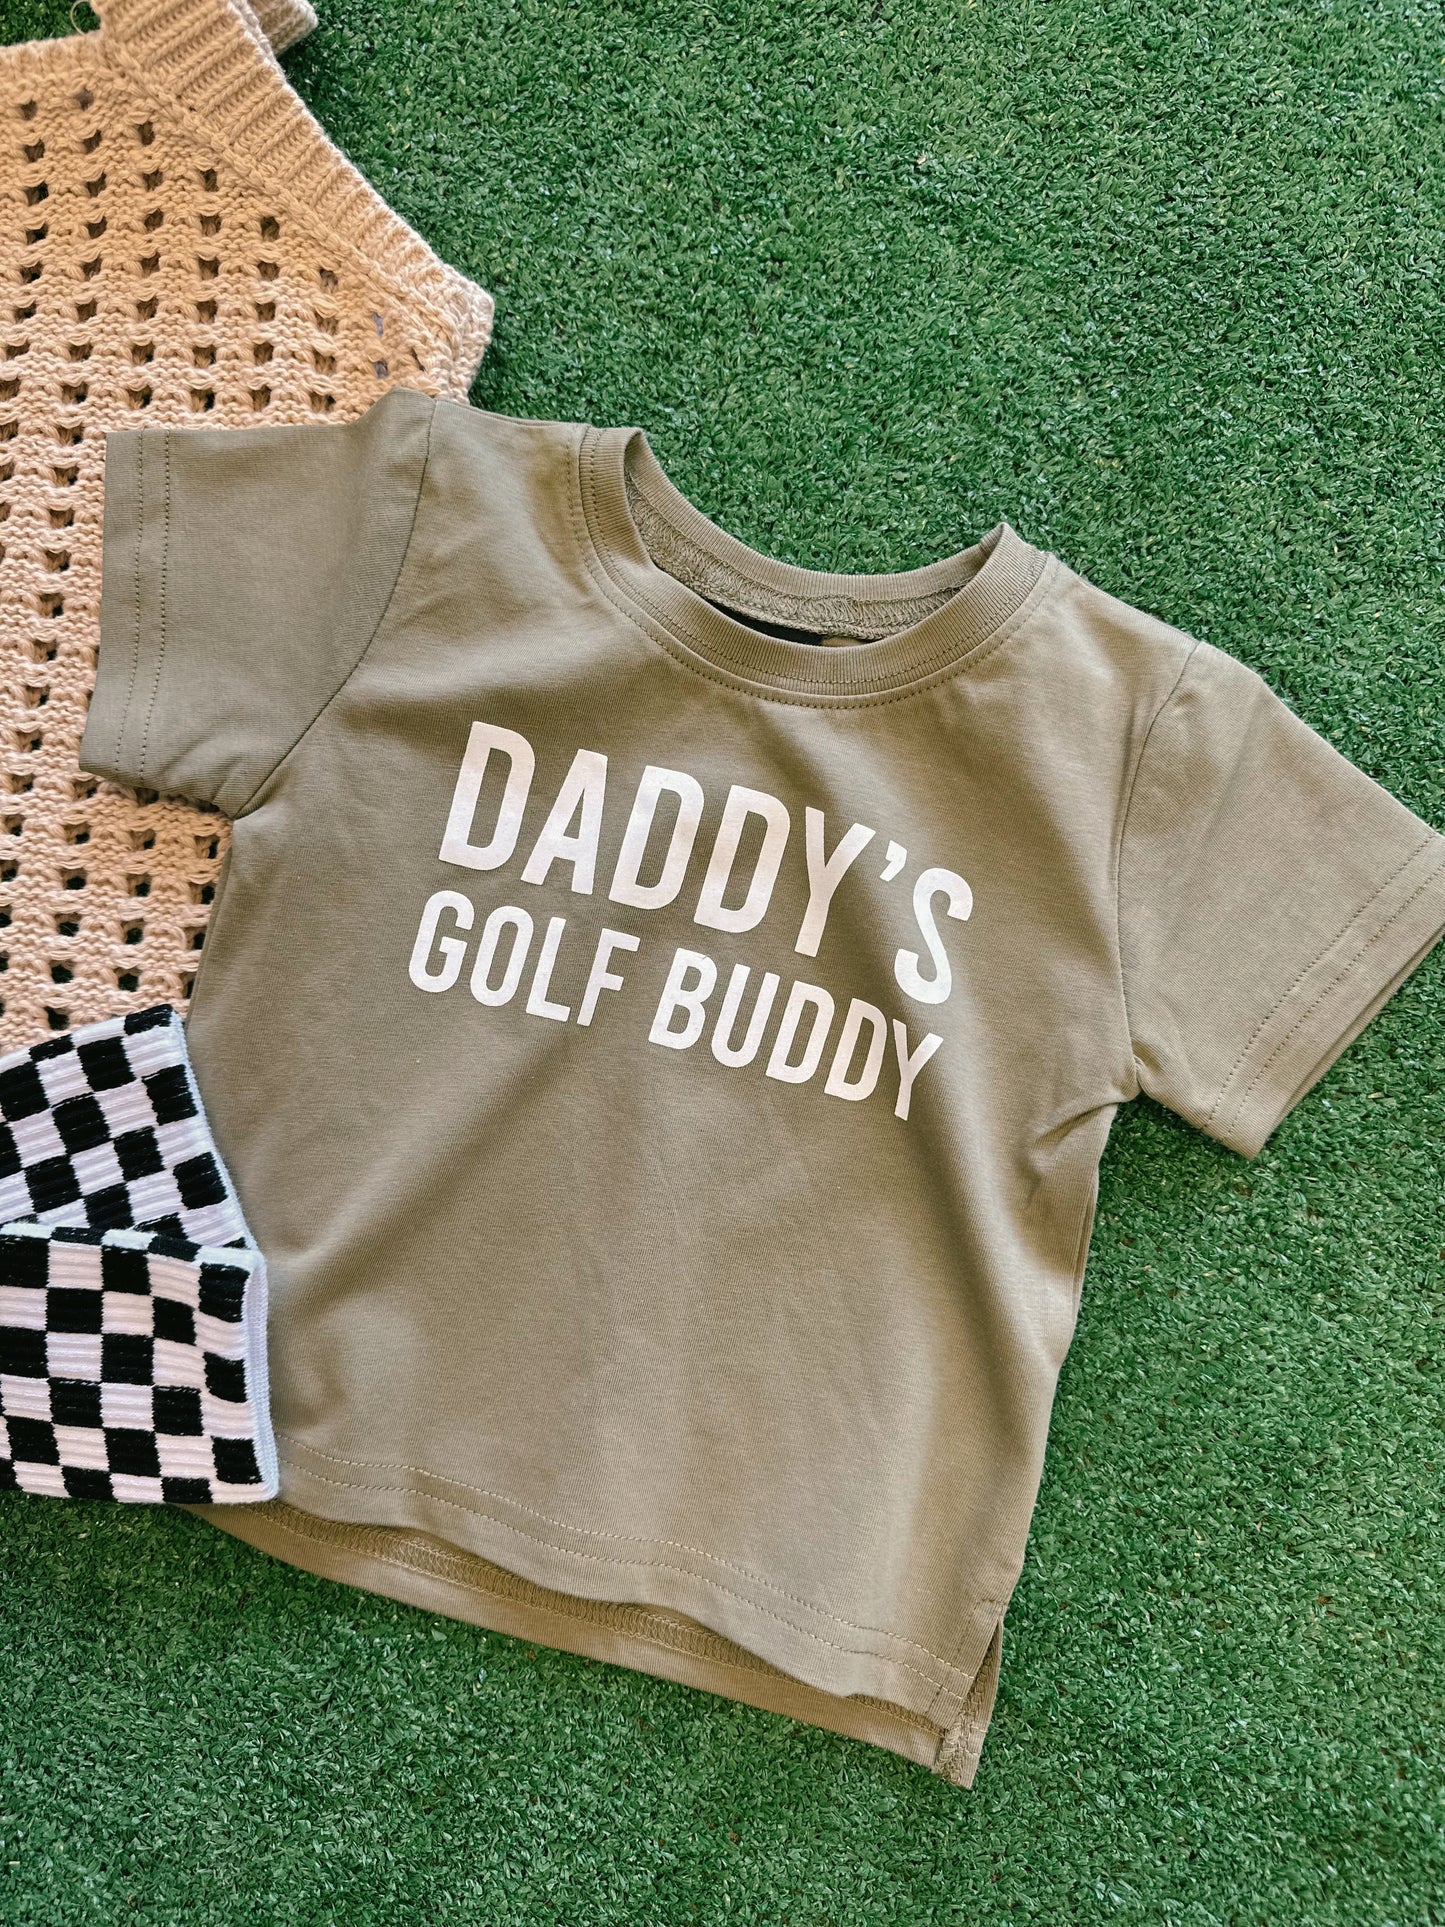 Daddy's Golf Buddy Kids Tee